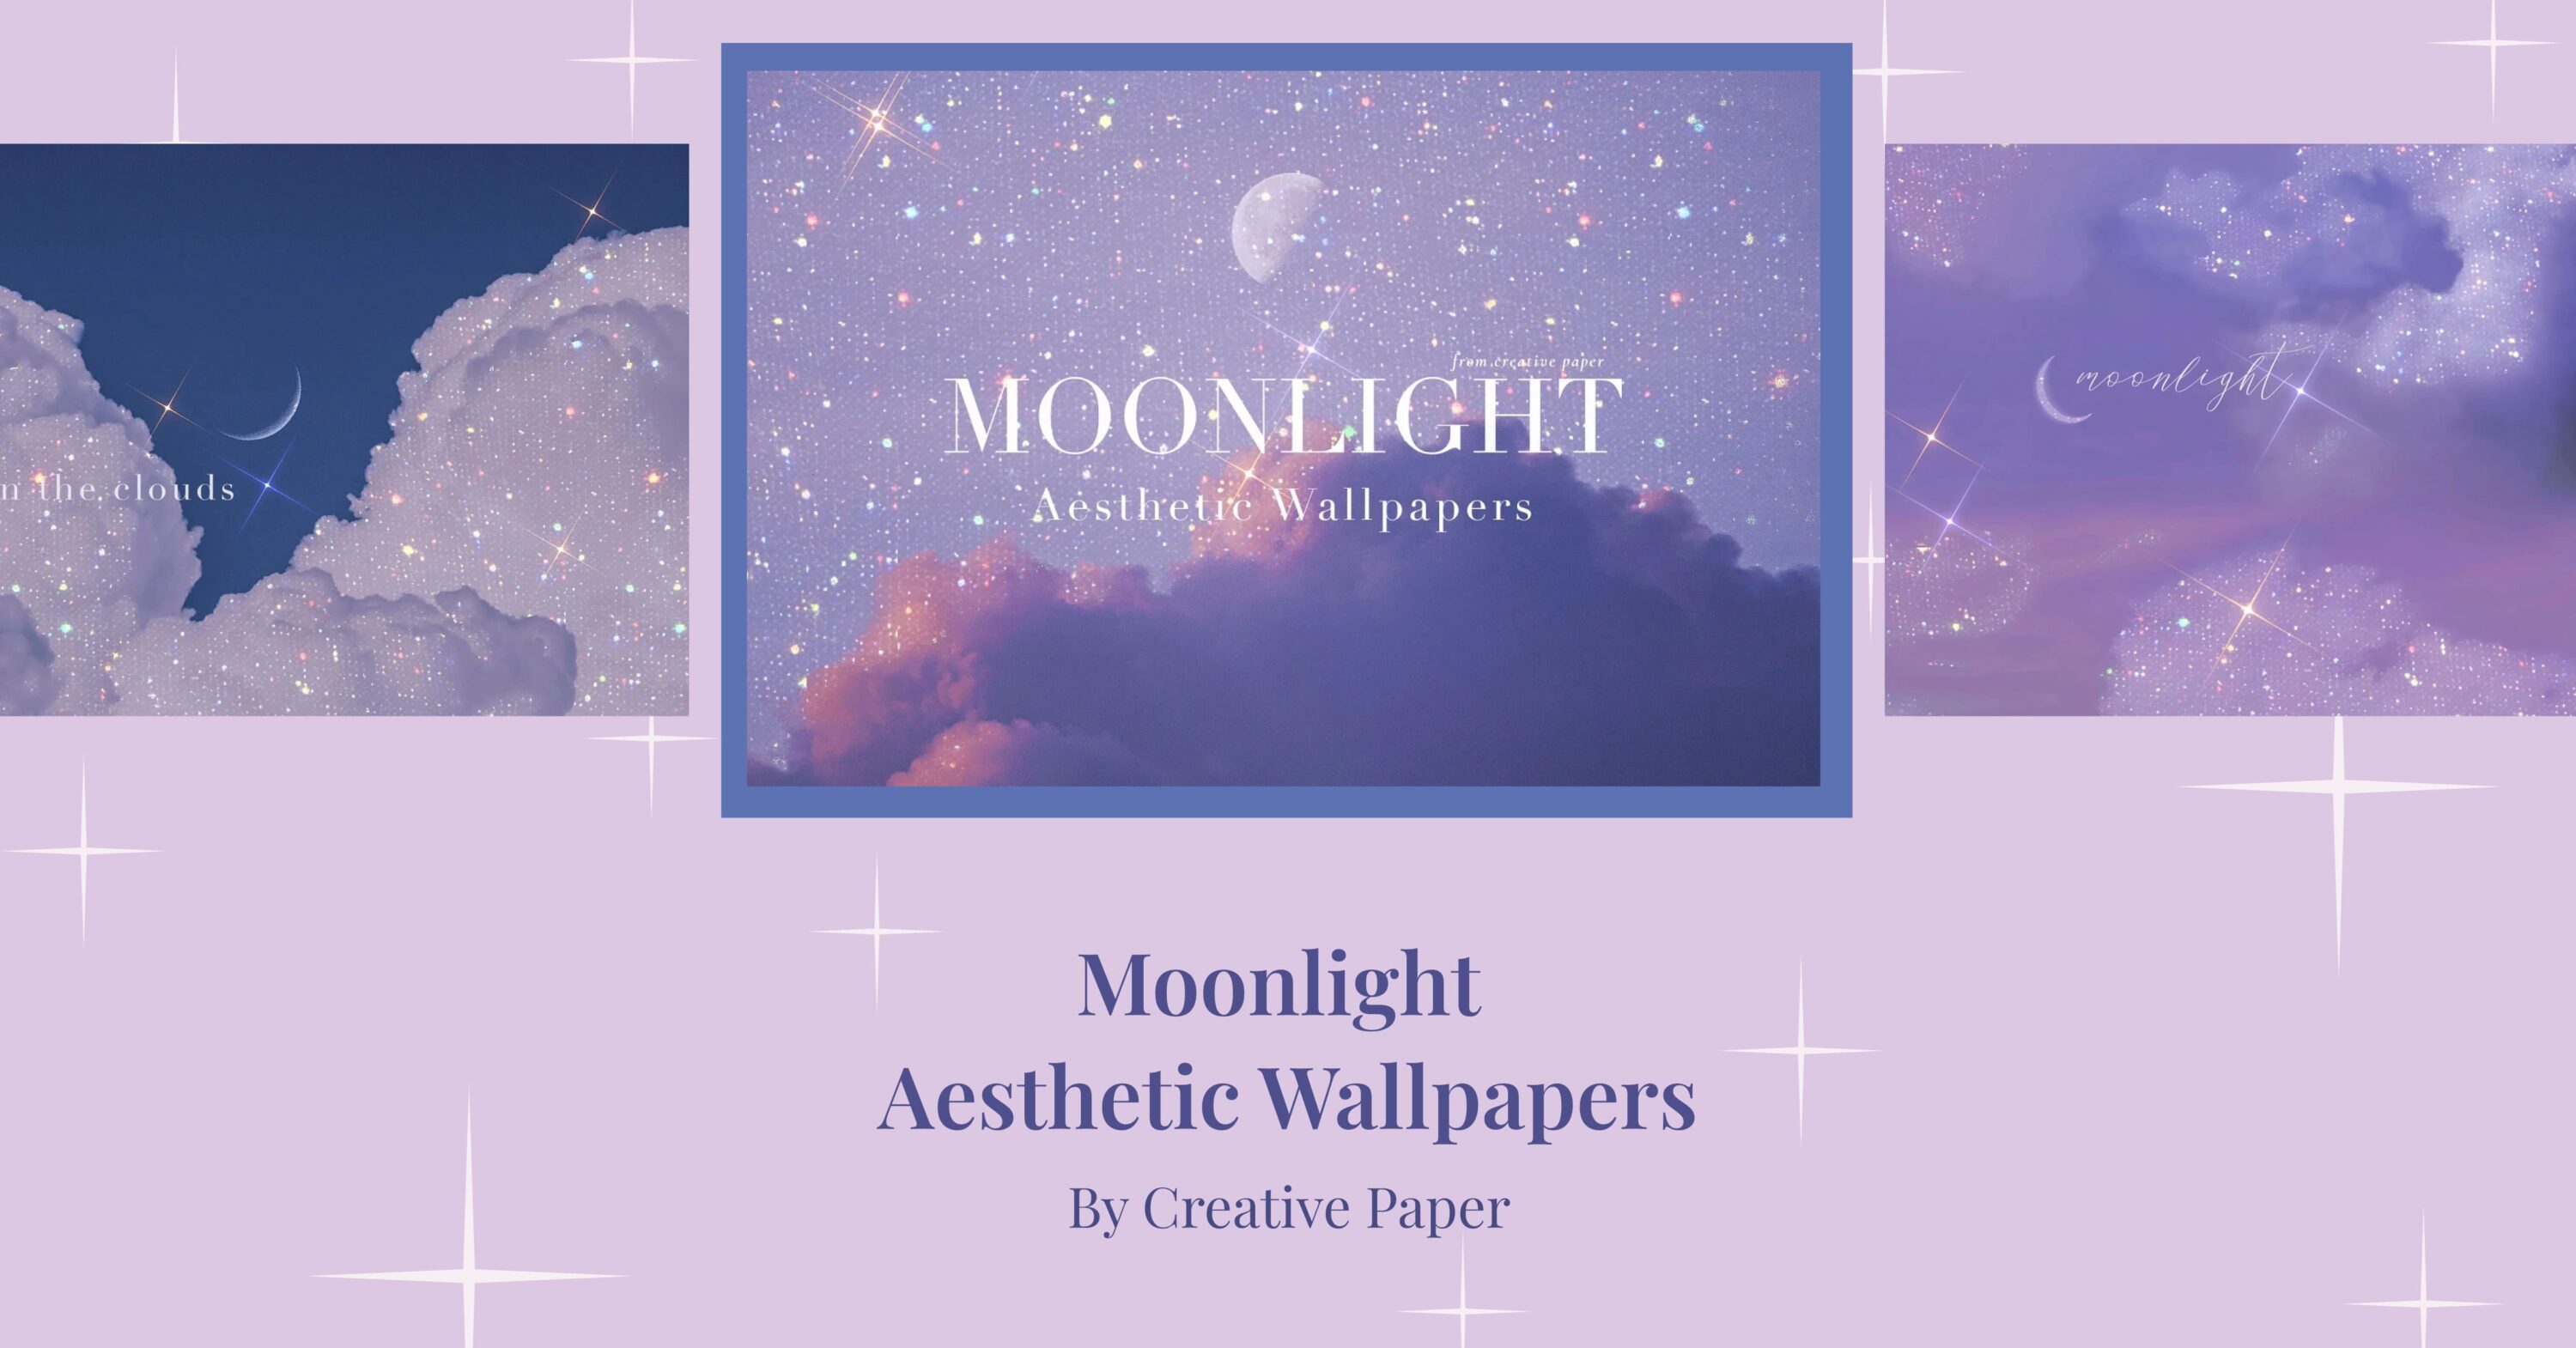 Moonlight Aesthetic Wallpapers facebook image.